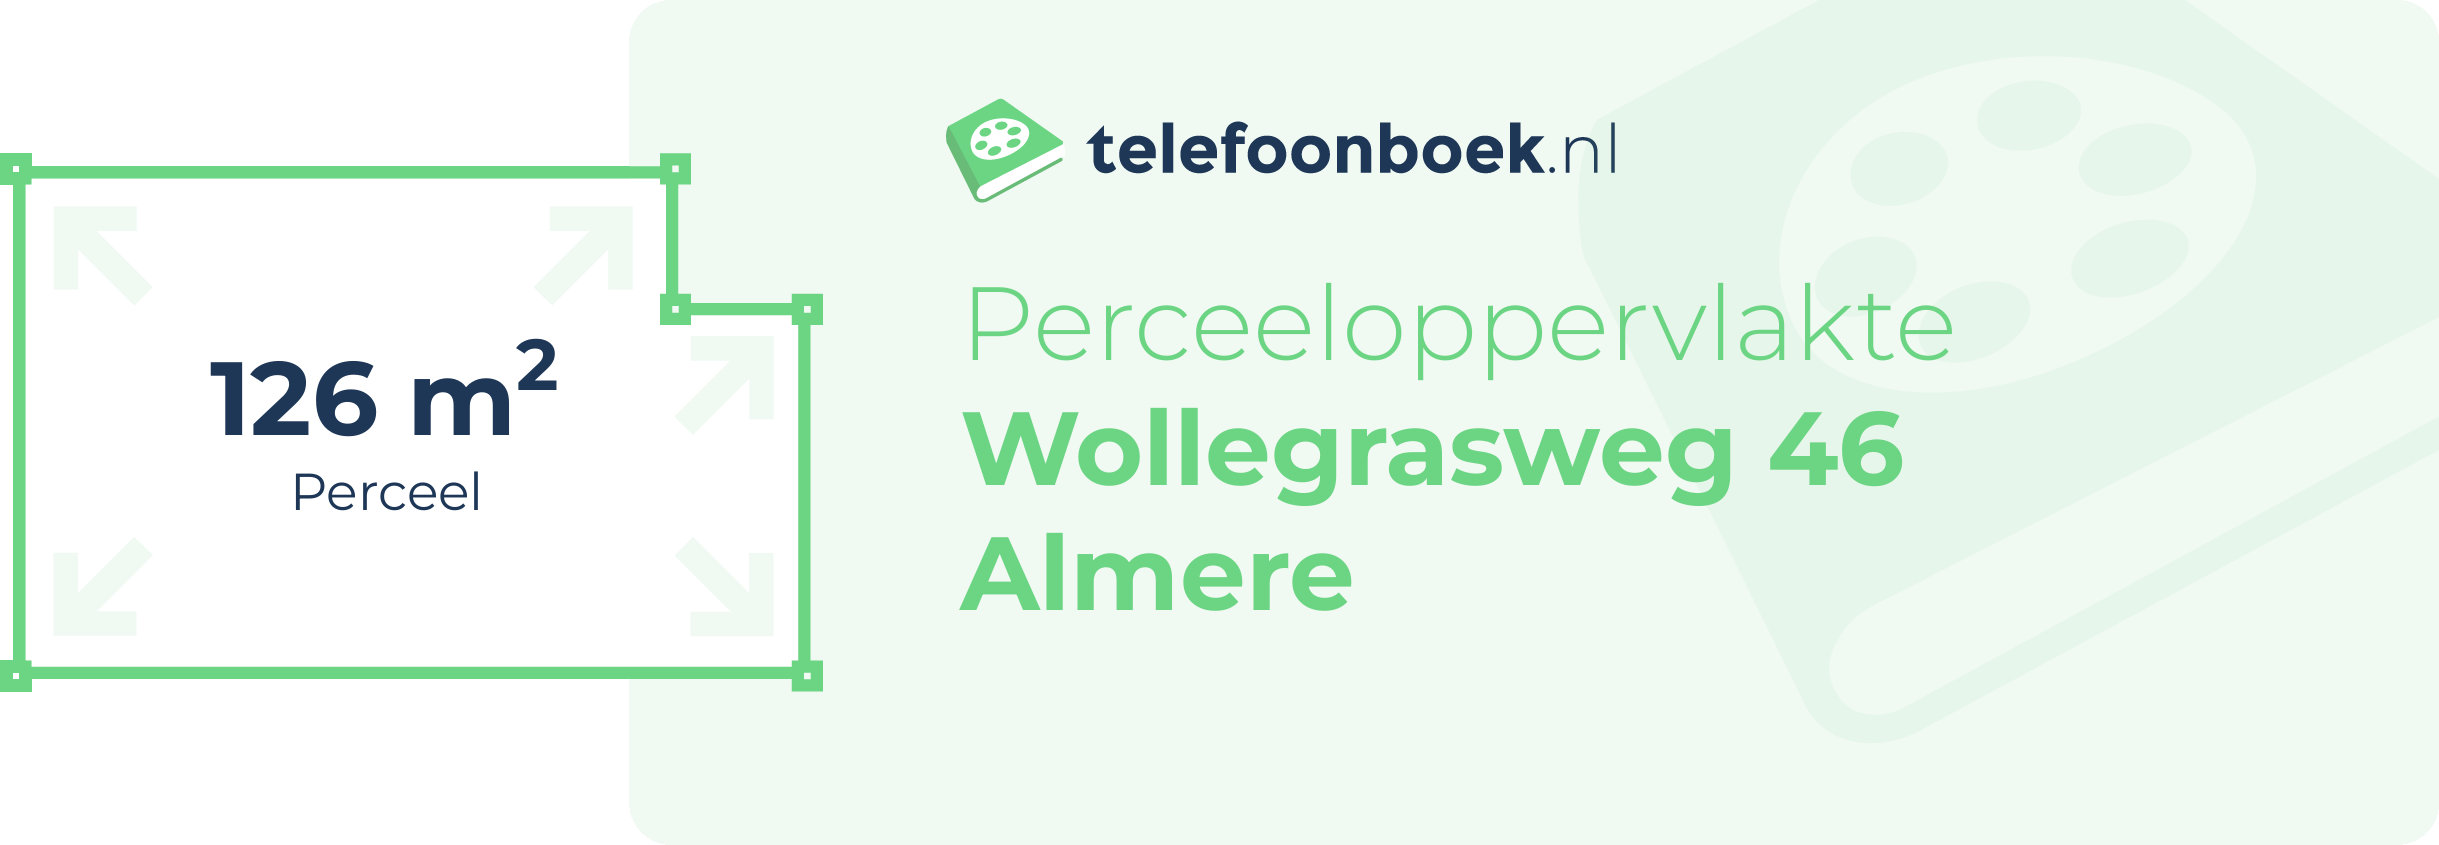 Perceeloppervlakte Wollegrasweg 46 Almere